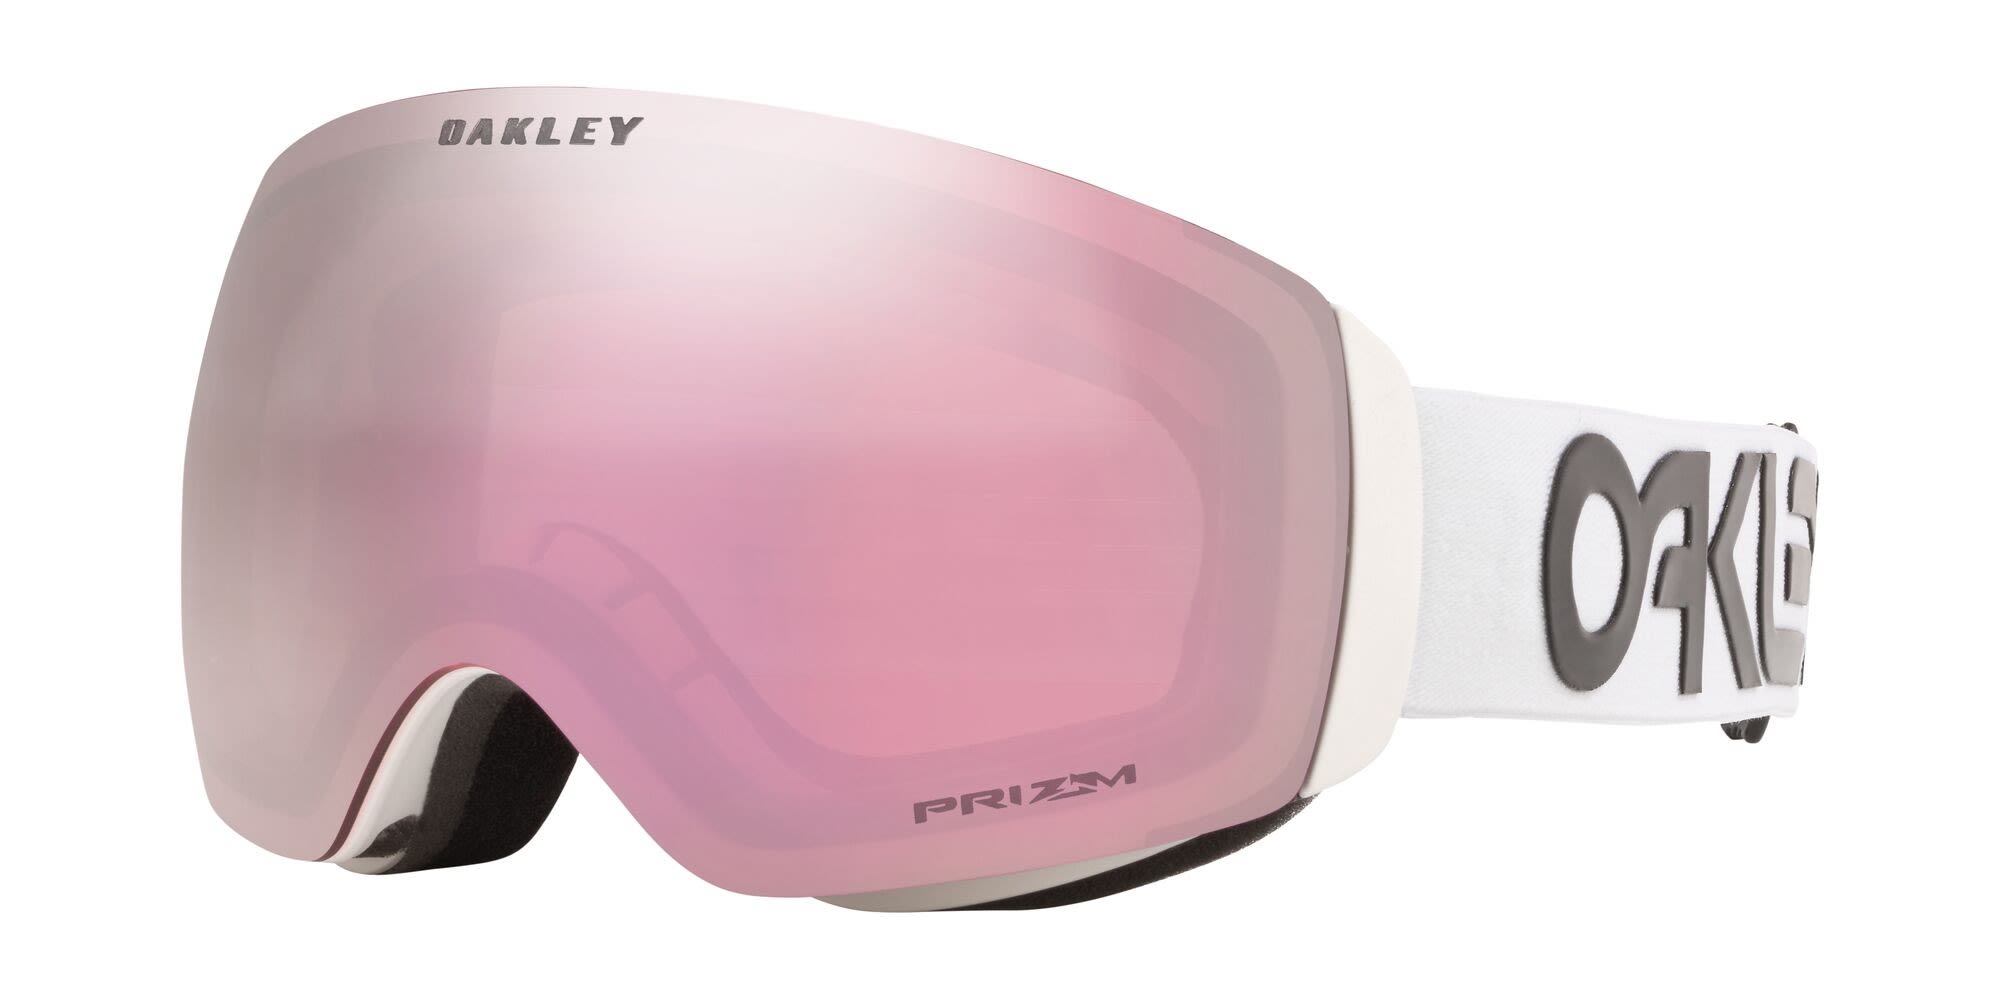 Oakley Flight Deck XM Prizm Premium Collections Weiss- Skibrillen- Grsse One Size - Farbe Factory Pilot White - Prizm Snow Hi Pink